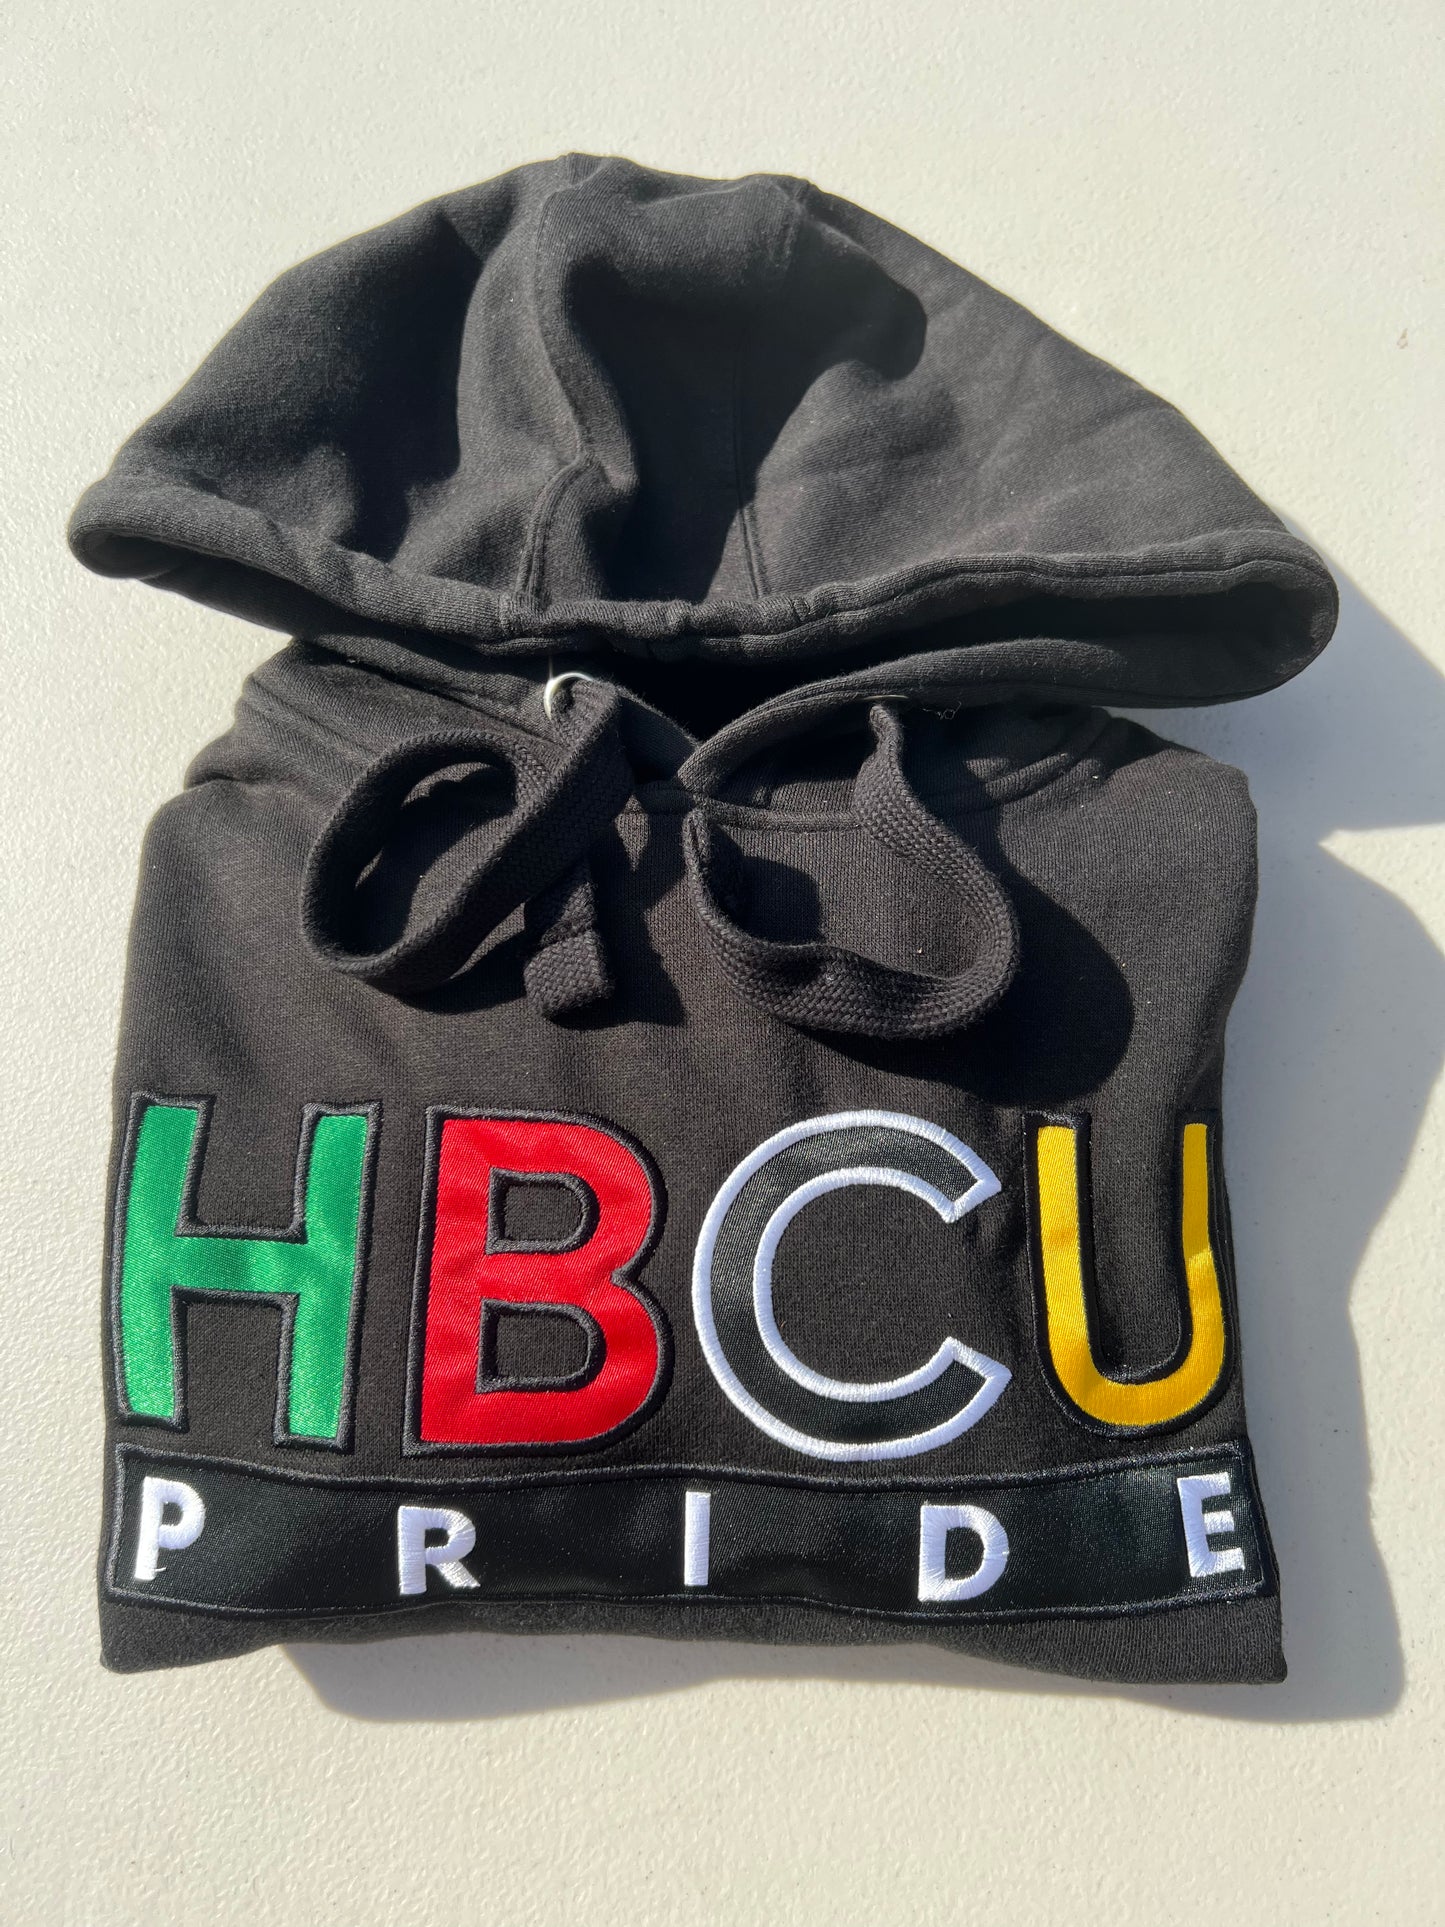 The “HBCU Pride” Embroidered Hoodie in Black